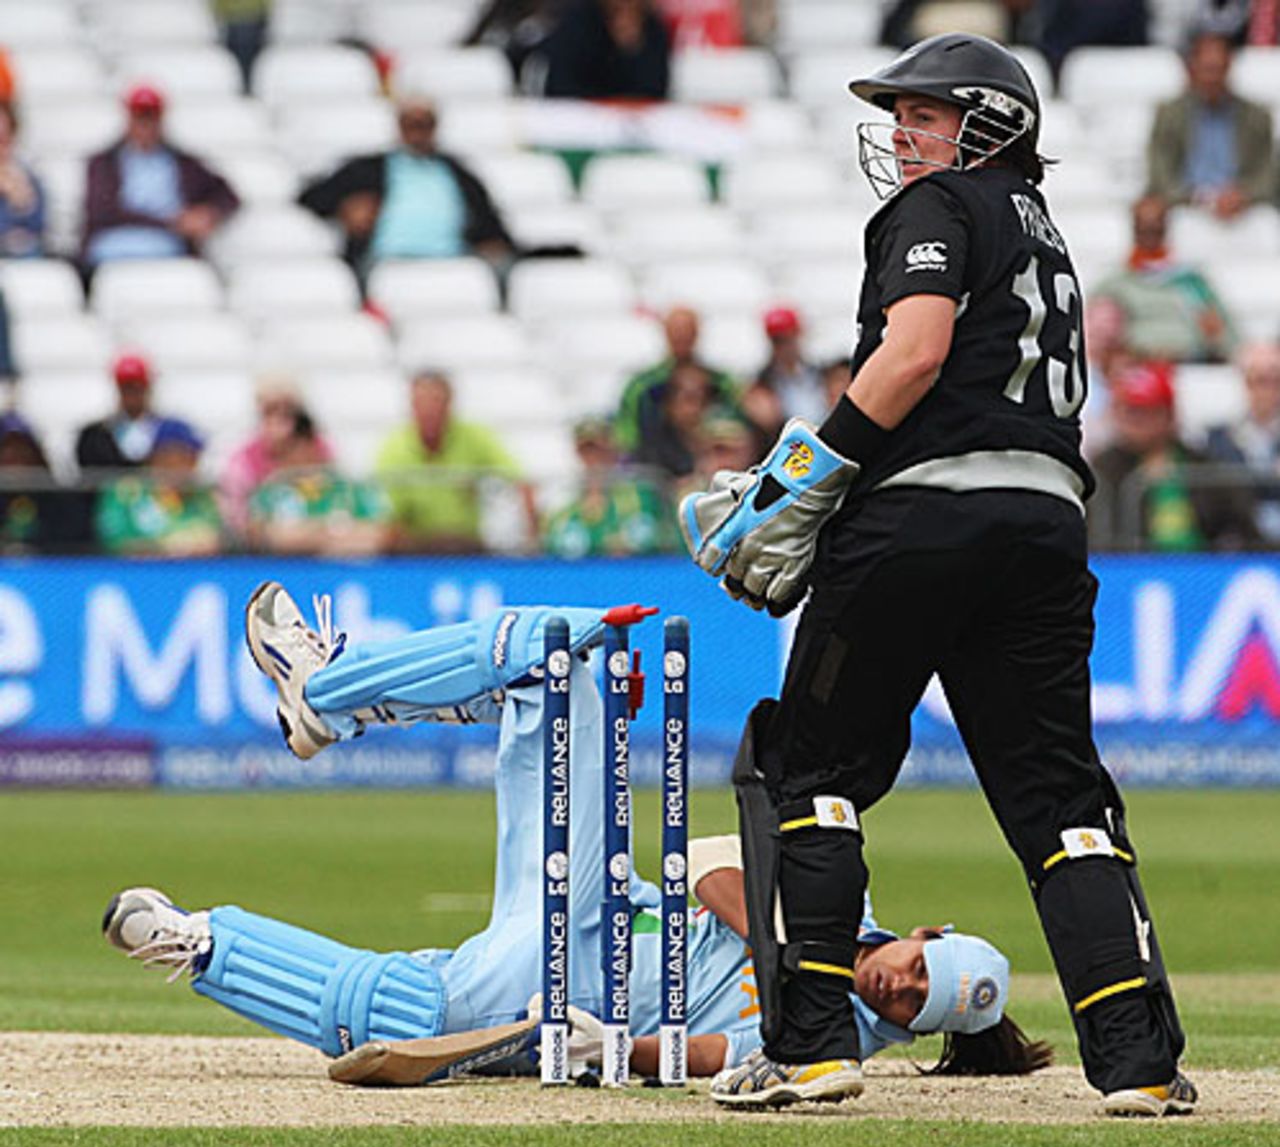 Amita Sharma knocks her stumps in trying to evade a high full toss, India v New Zealand, 1st semi-final, ICC Women's World Twenty20, Trent Bridge, June 18, 2009